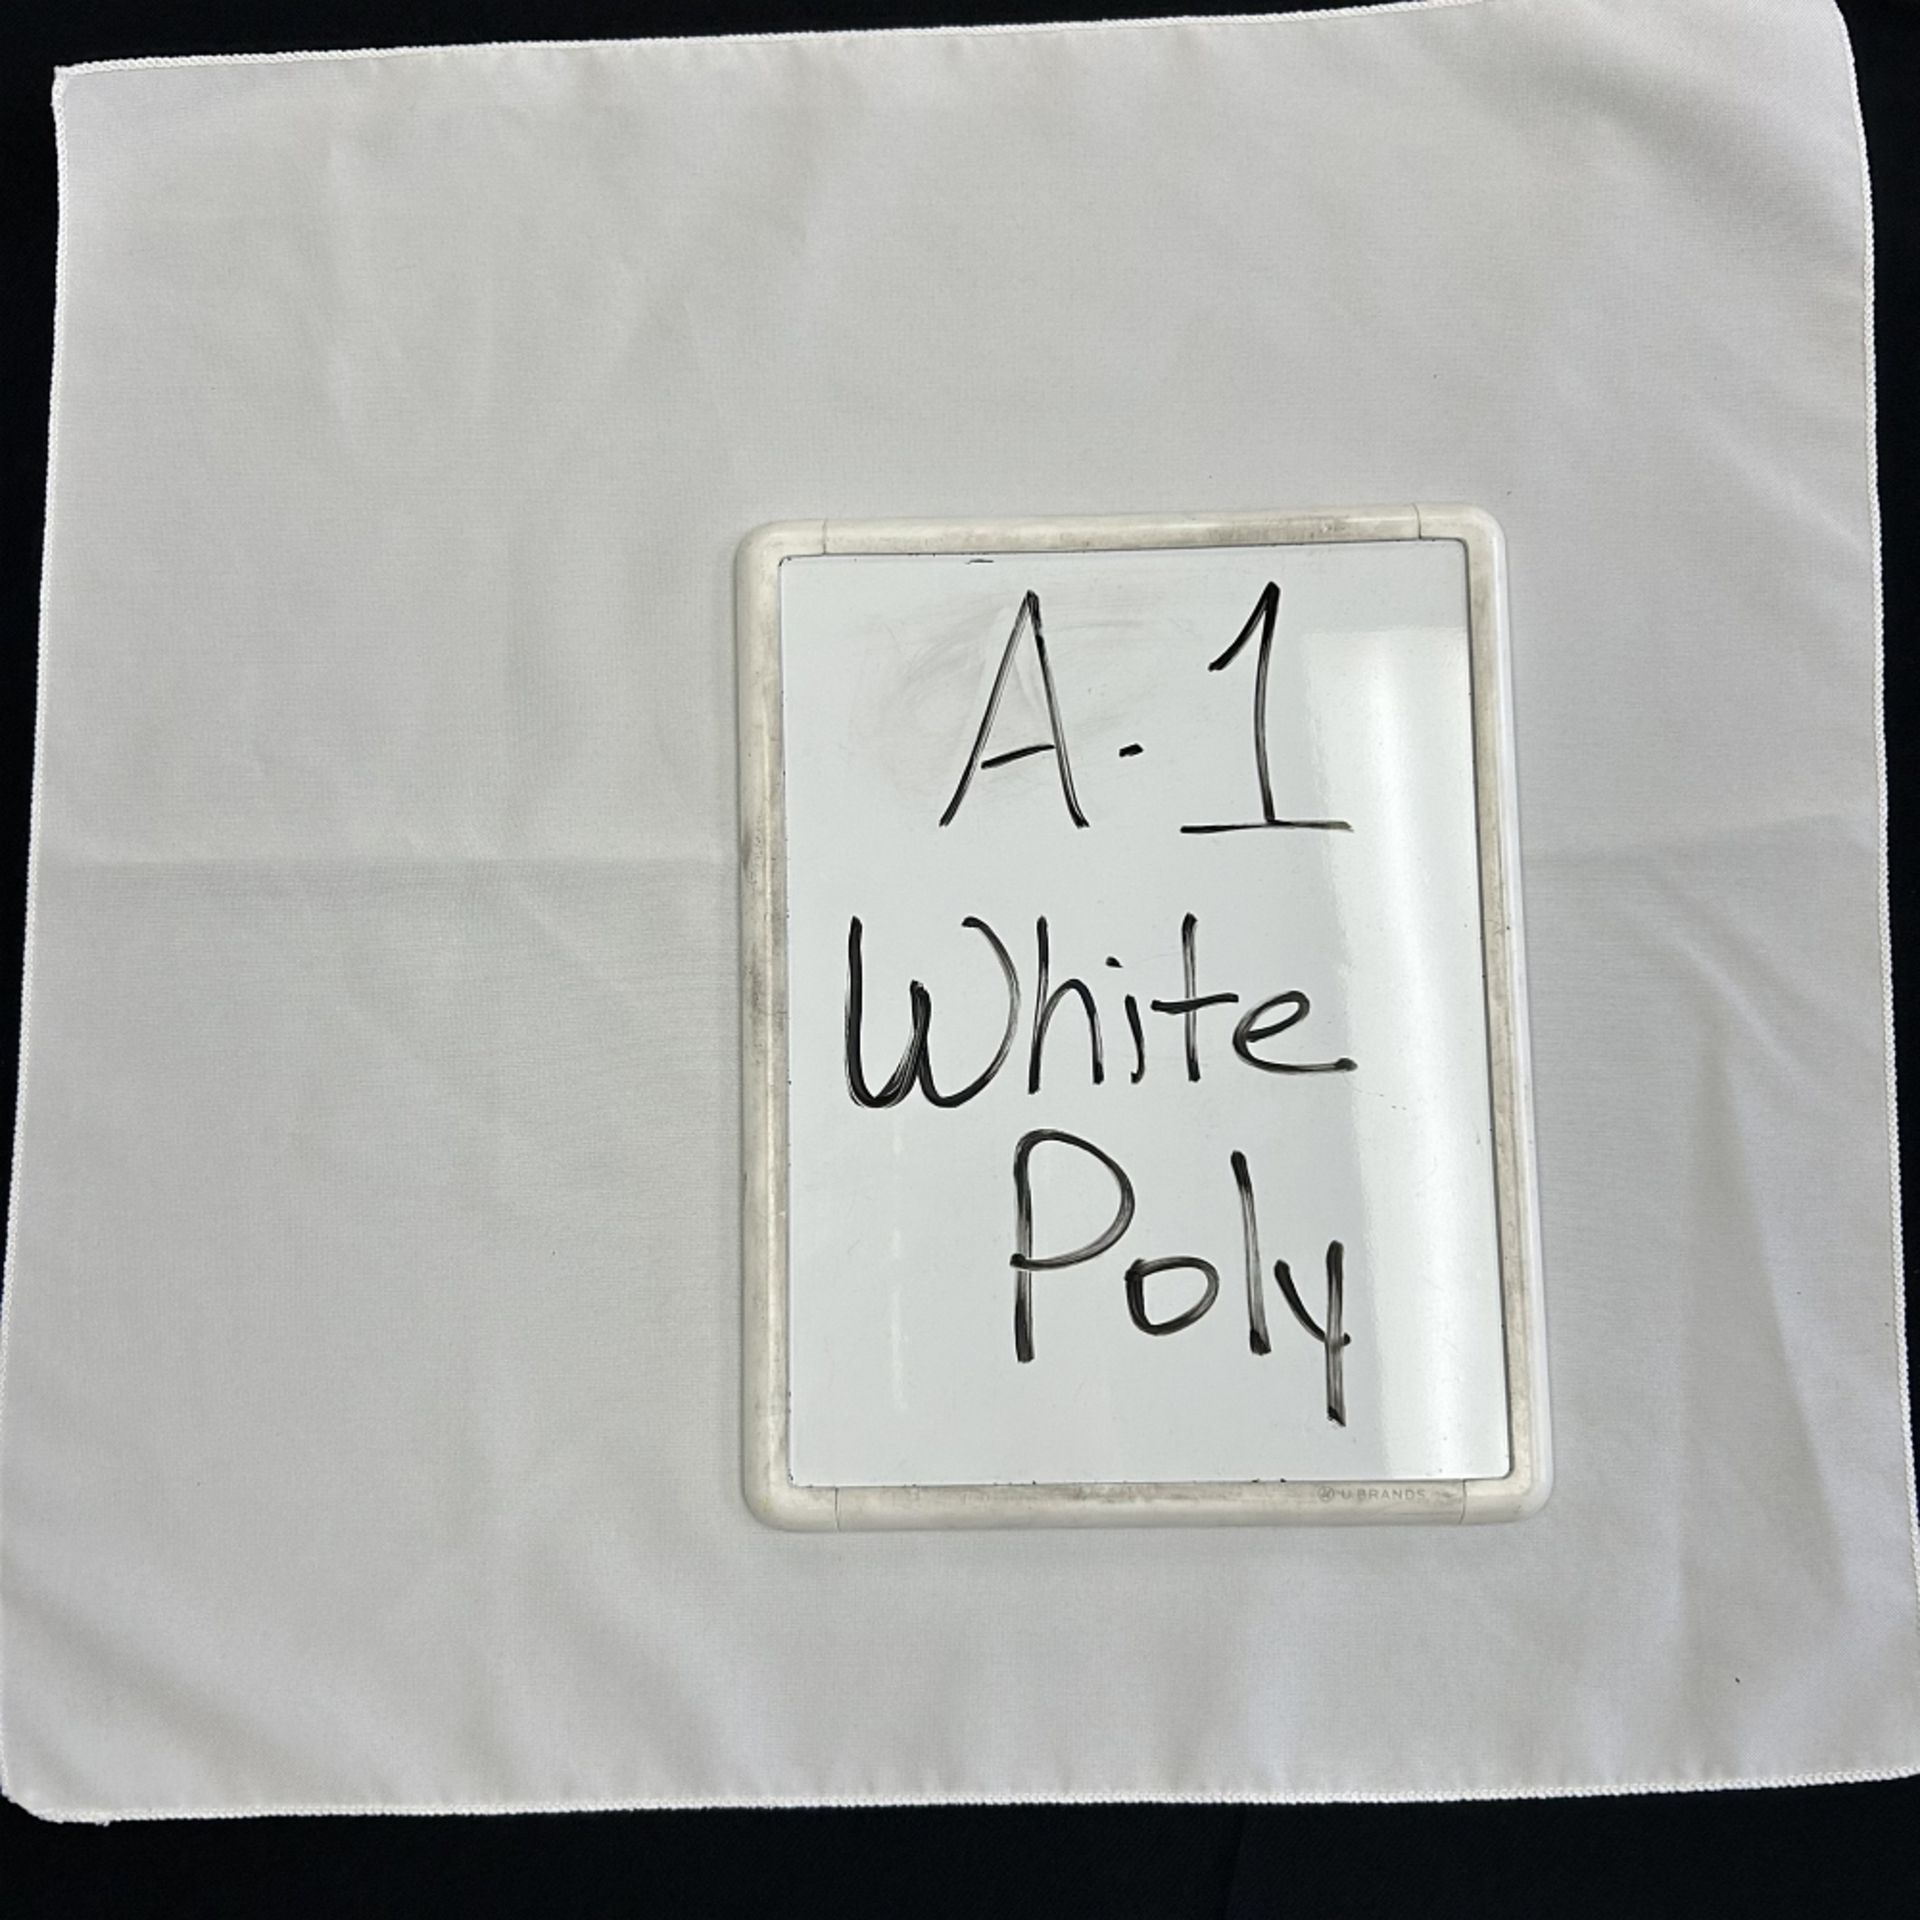 90" x 156" Banquet A-1 White Poly